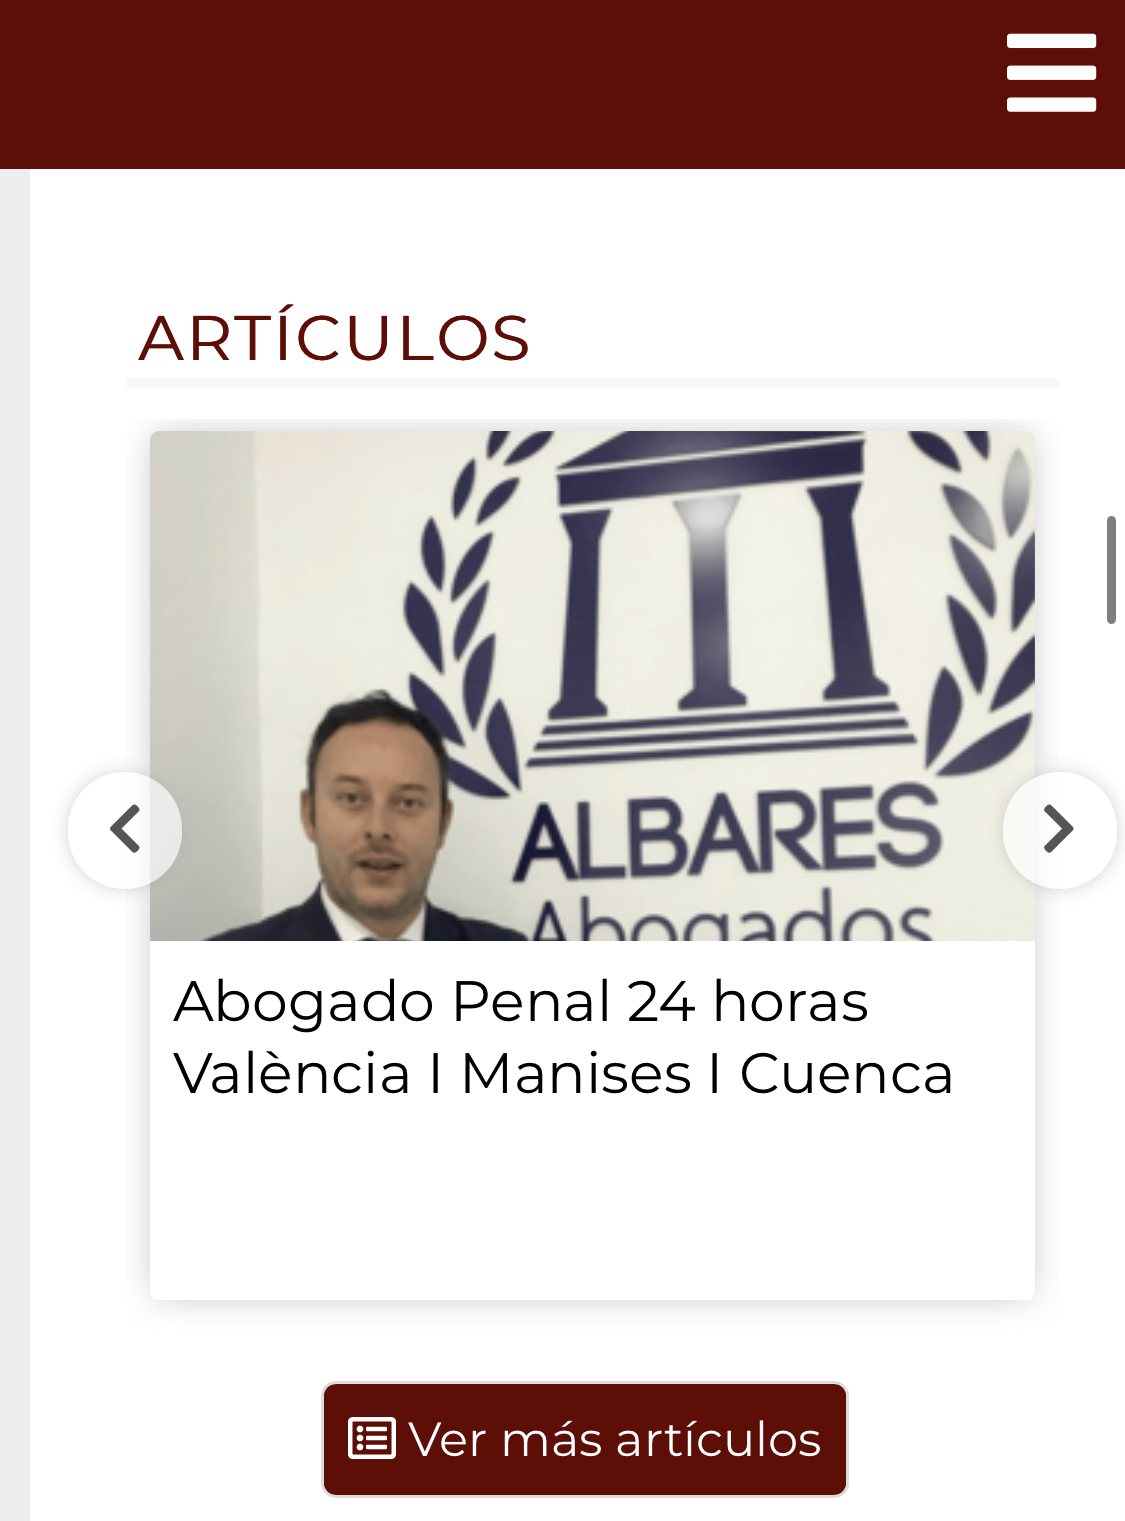 ARTICULOS
| — |
\/
VILLy!
\ Ls
< ALBARES >

I11
—
AhAnadnc

Abogado Penal 24 horas
Valencia | Manises | Cuenca

   

Ver mas articulos